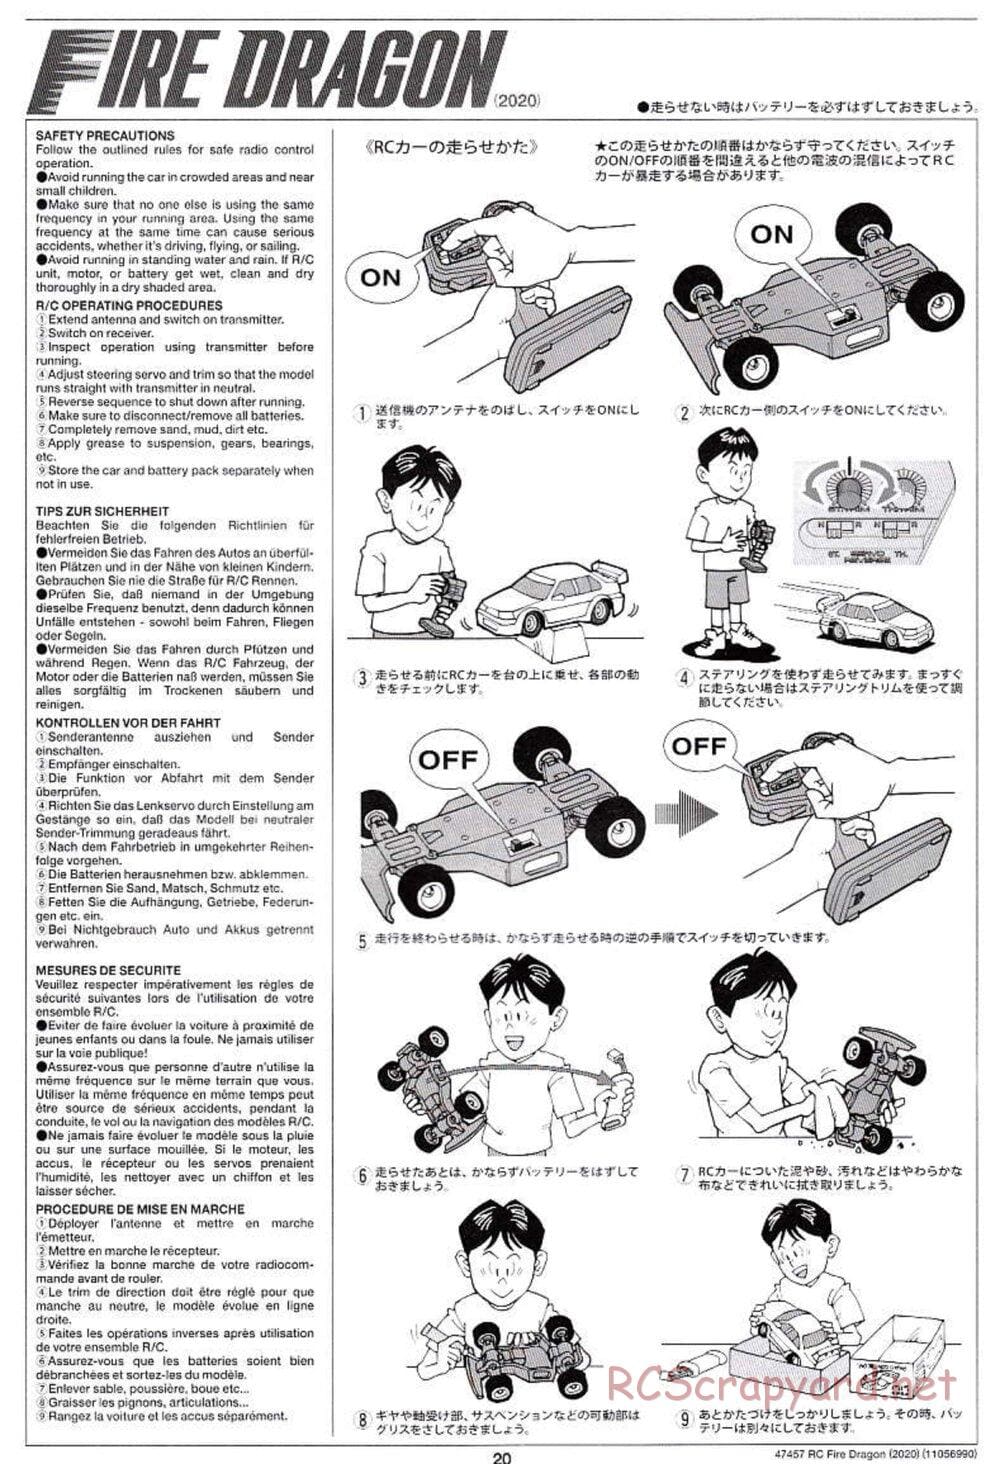 Tamiya - Fire Dragon (2020) Chassis - Manual - Page 20